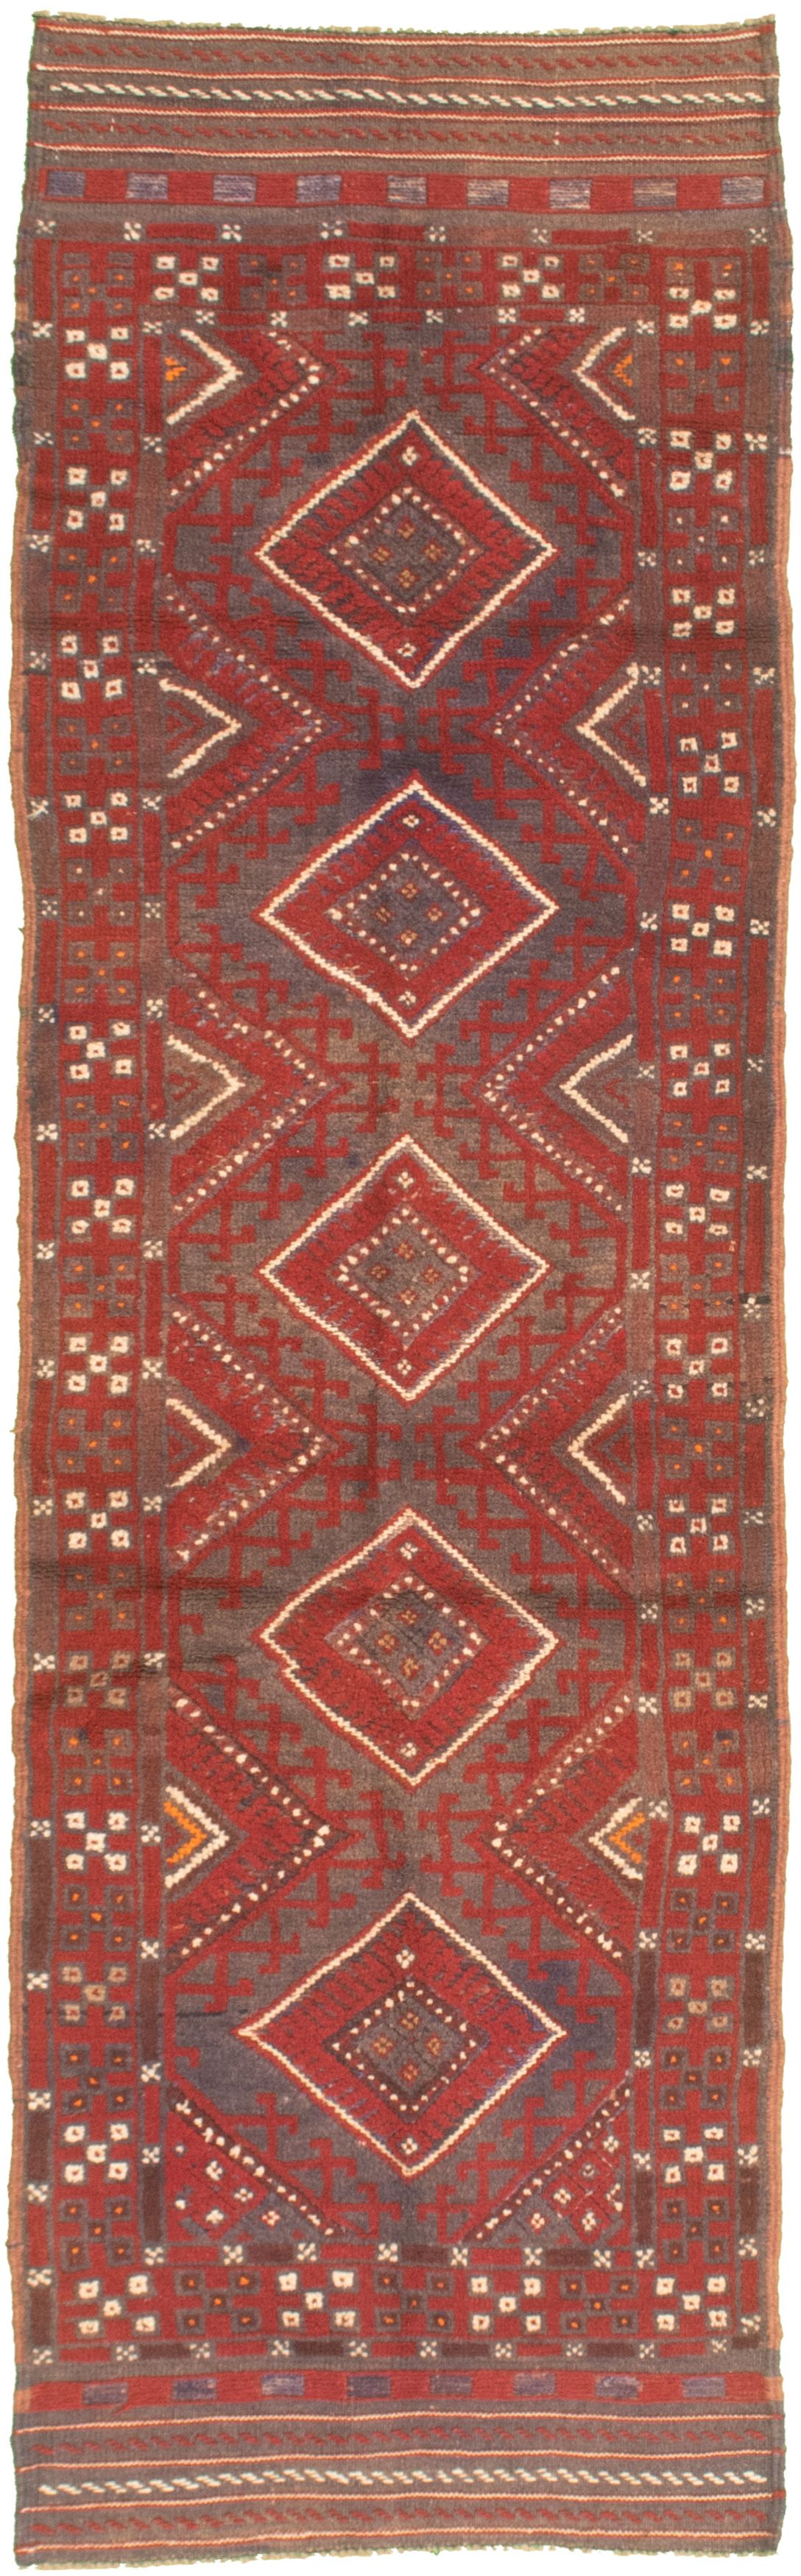 Hand-knotted Tajik Caucasian Grey Wool Rug 2'2" x 8'3" Size: 2'2" x 8'3"  